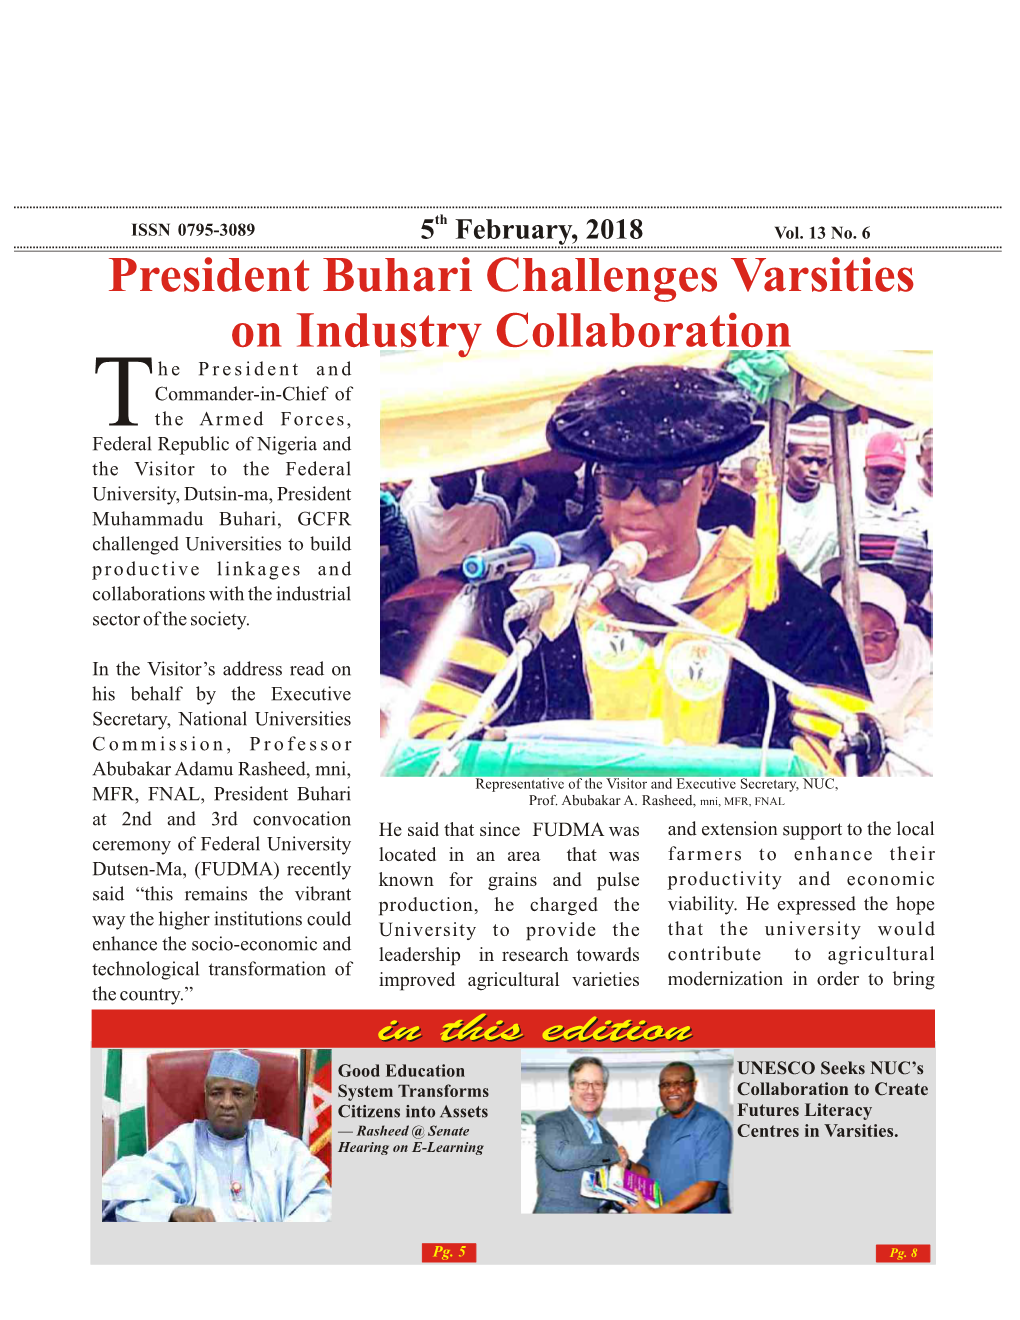 President Buhari Challenges Varsities on Industry Collaboration